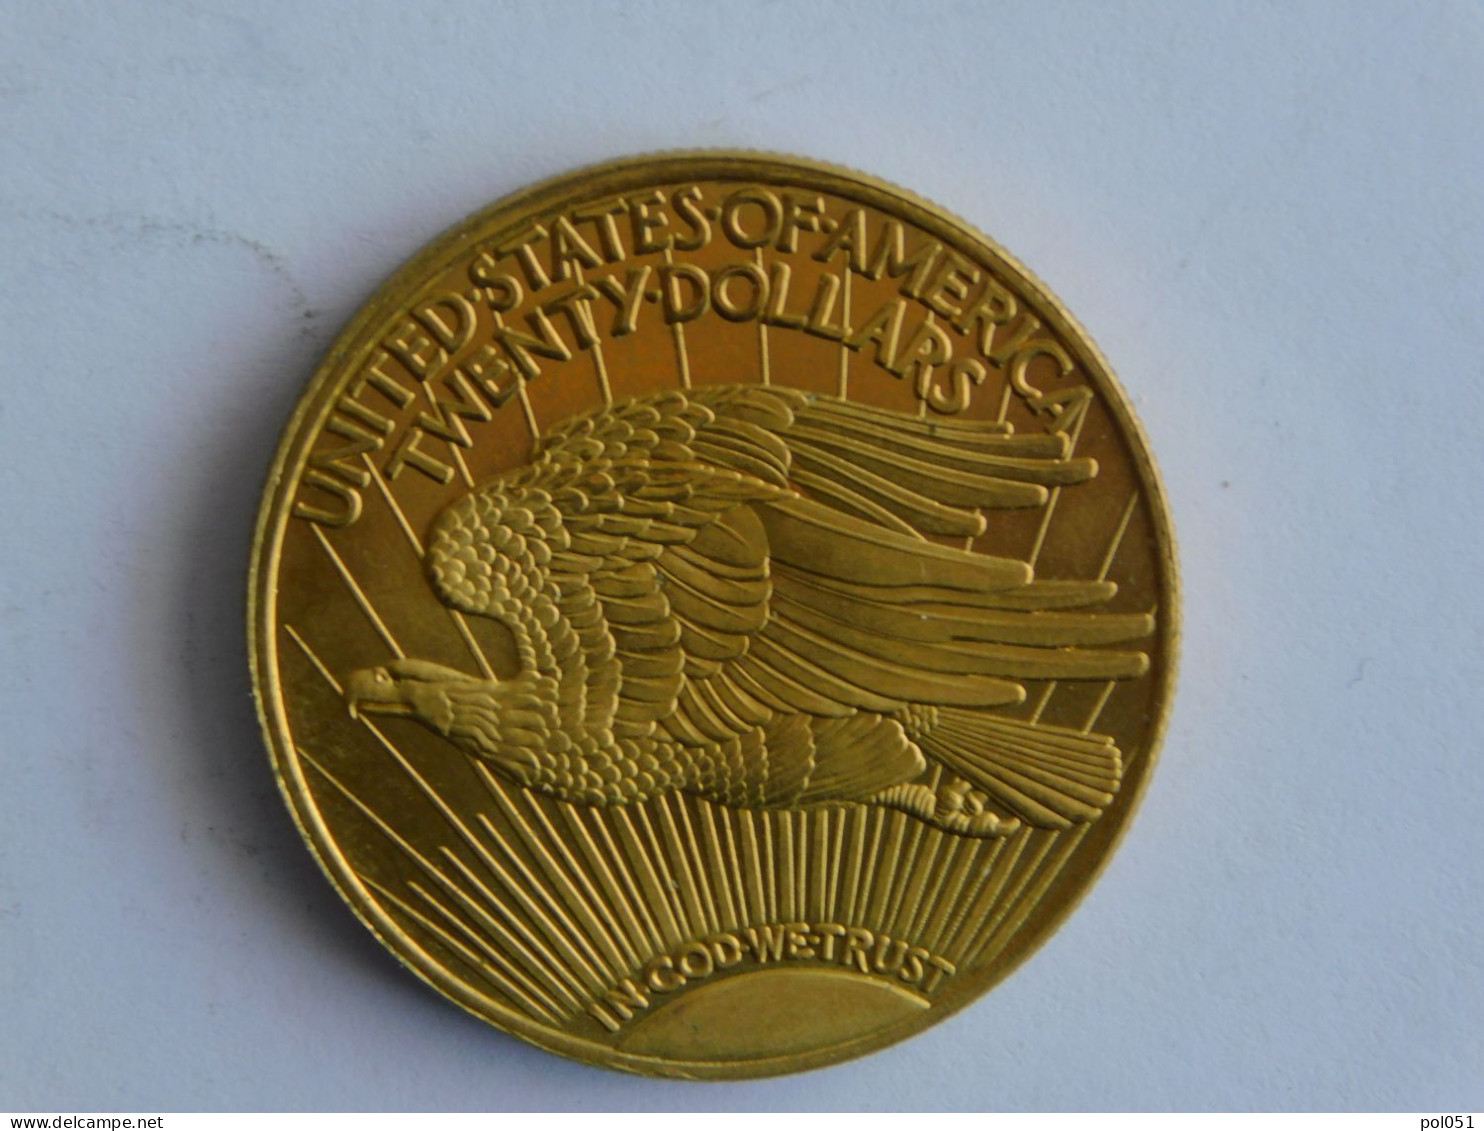 USA 20 TWENTY DOLLAR 1931 D OR GOLD Dollars Copie Copy - 20$ - Double Eagles - 1907-1933: Saint-Gaudens